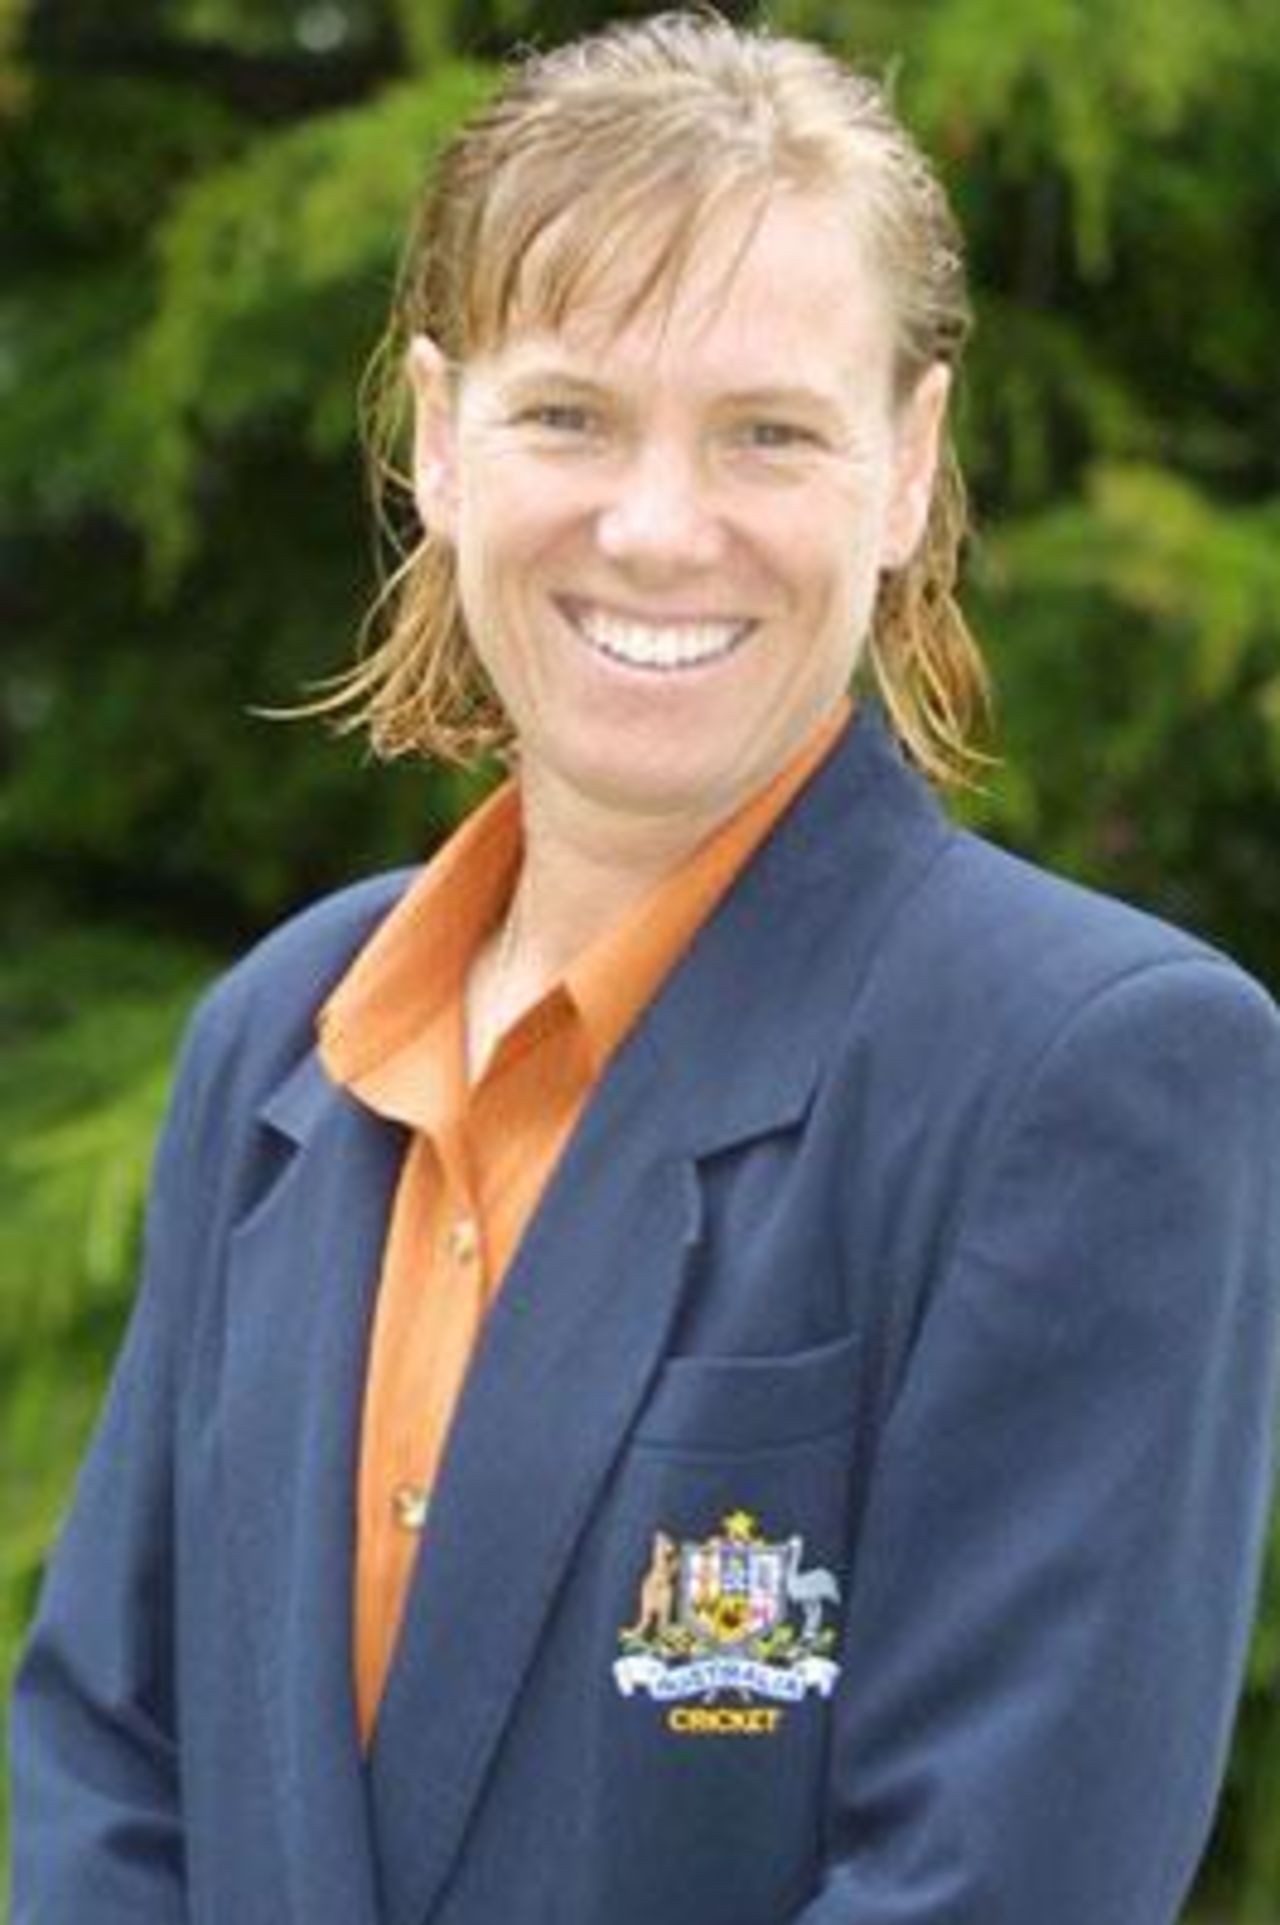 Portrait of Joanne Broadbent - Australia player in the CricInfo Women's World Cup 2000